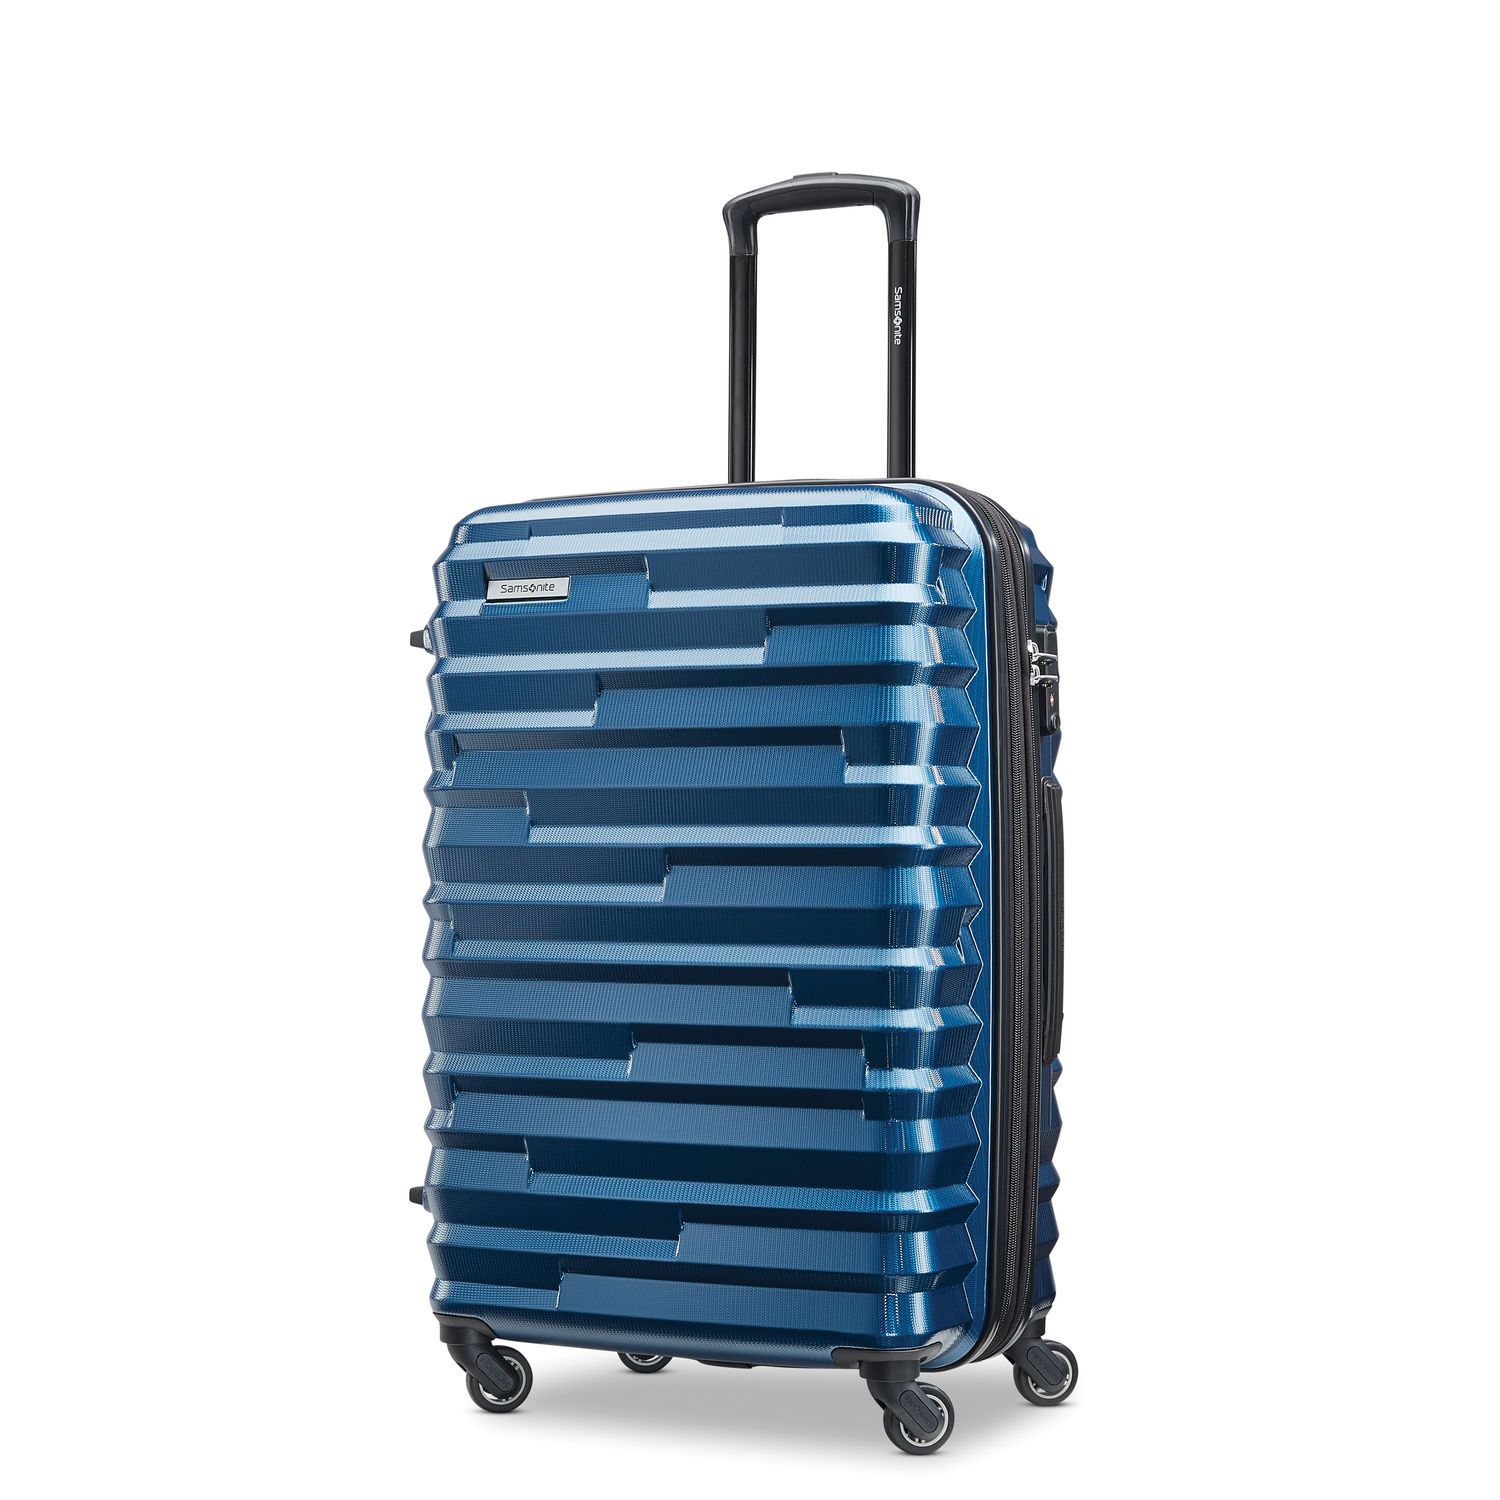 Samsonite Ziplite 4.0 Spinner Medium Expandable Luggage - Lagoon